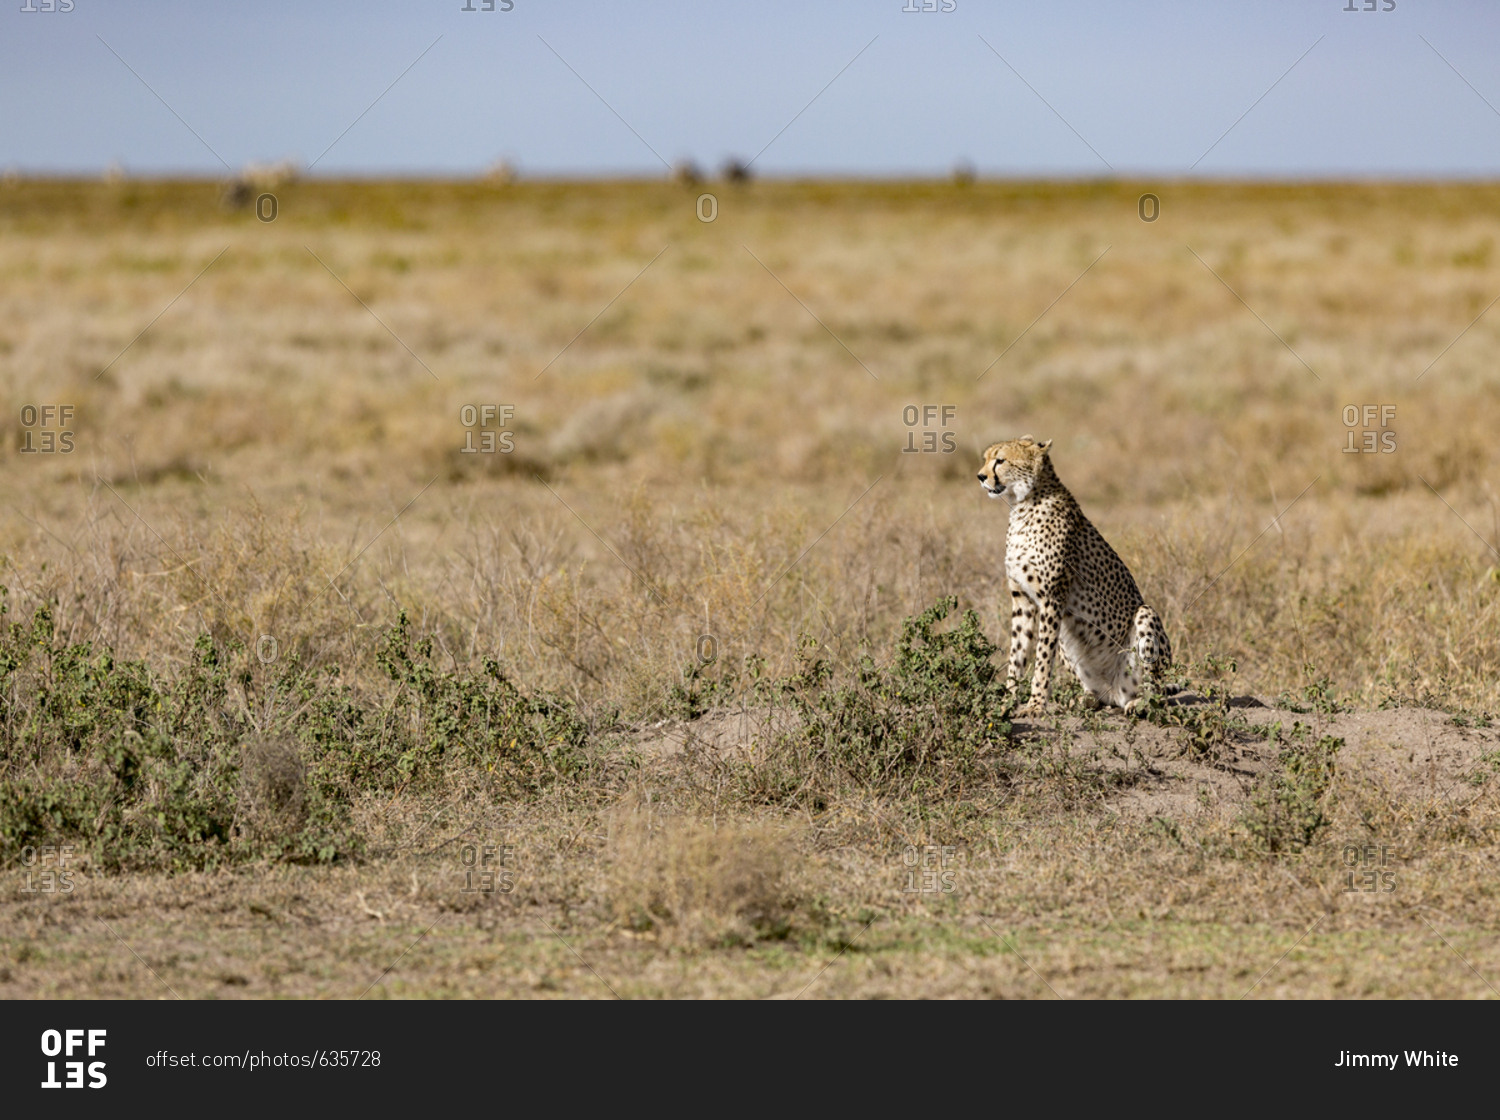 A Cheetah (Acinonyx jubatus) scans the open plains of the Serengeti National Park, Tanzania